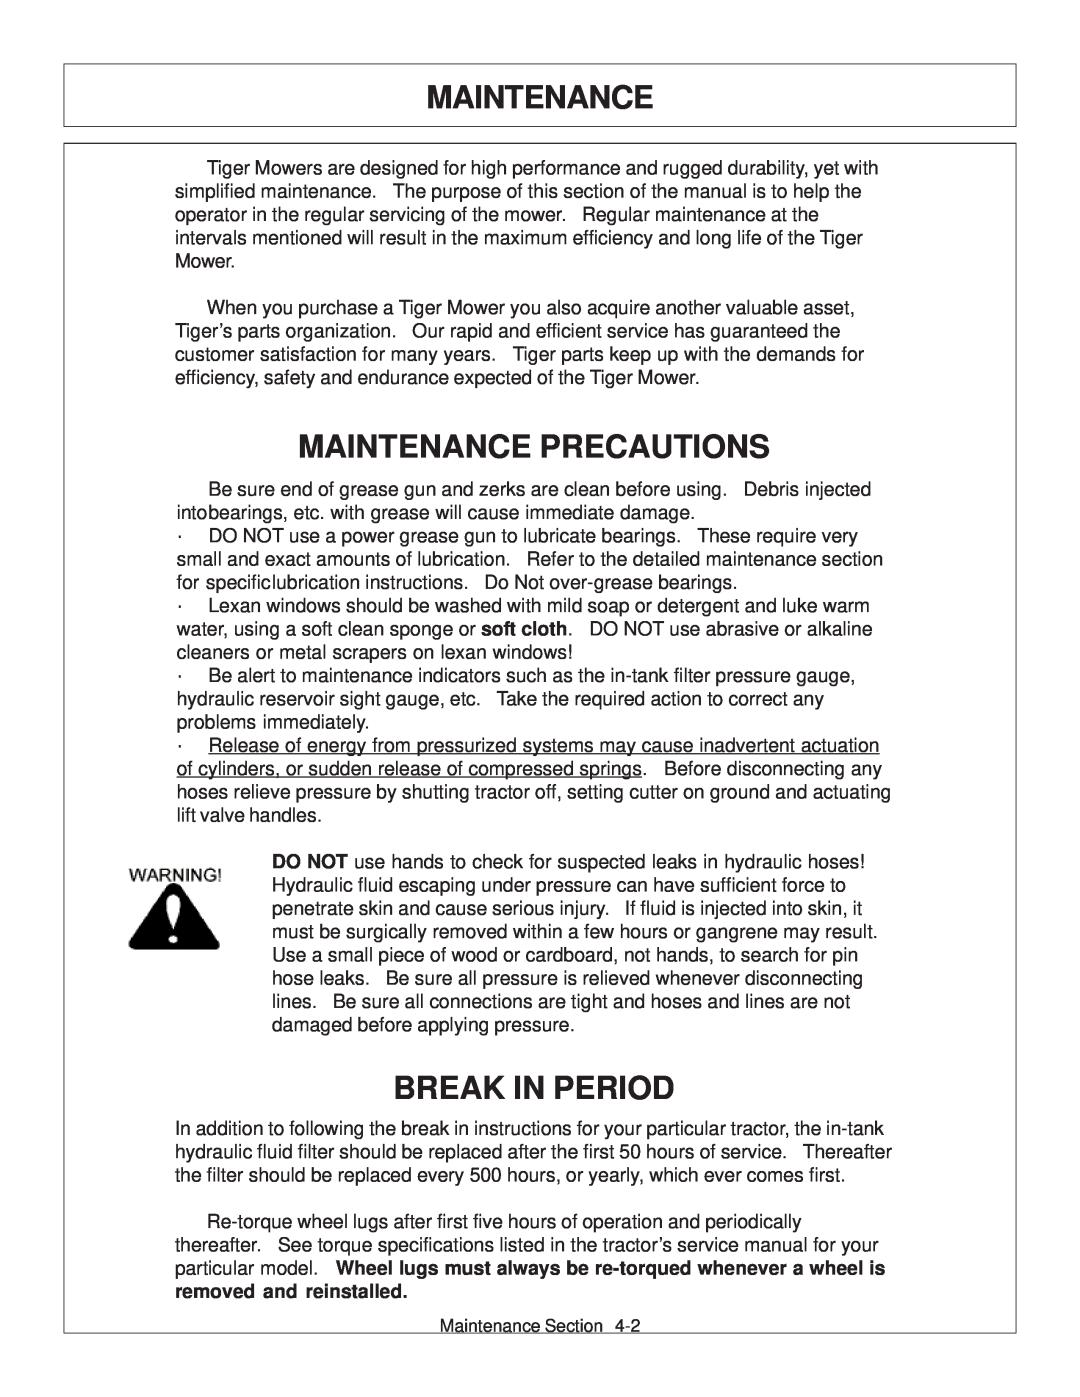 Tiger Products Co., Ltd JD 72-7520 manual Maintenance Precautions, Break In Period 